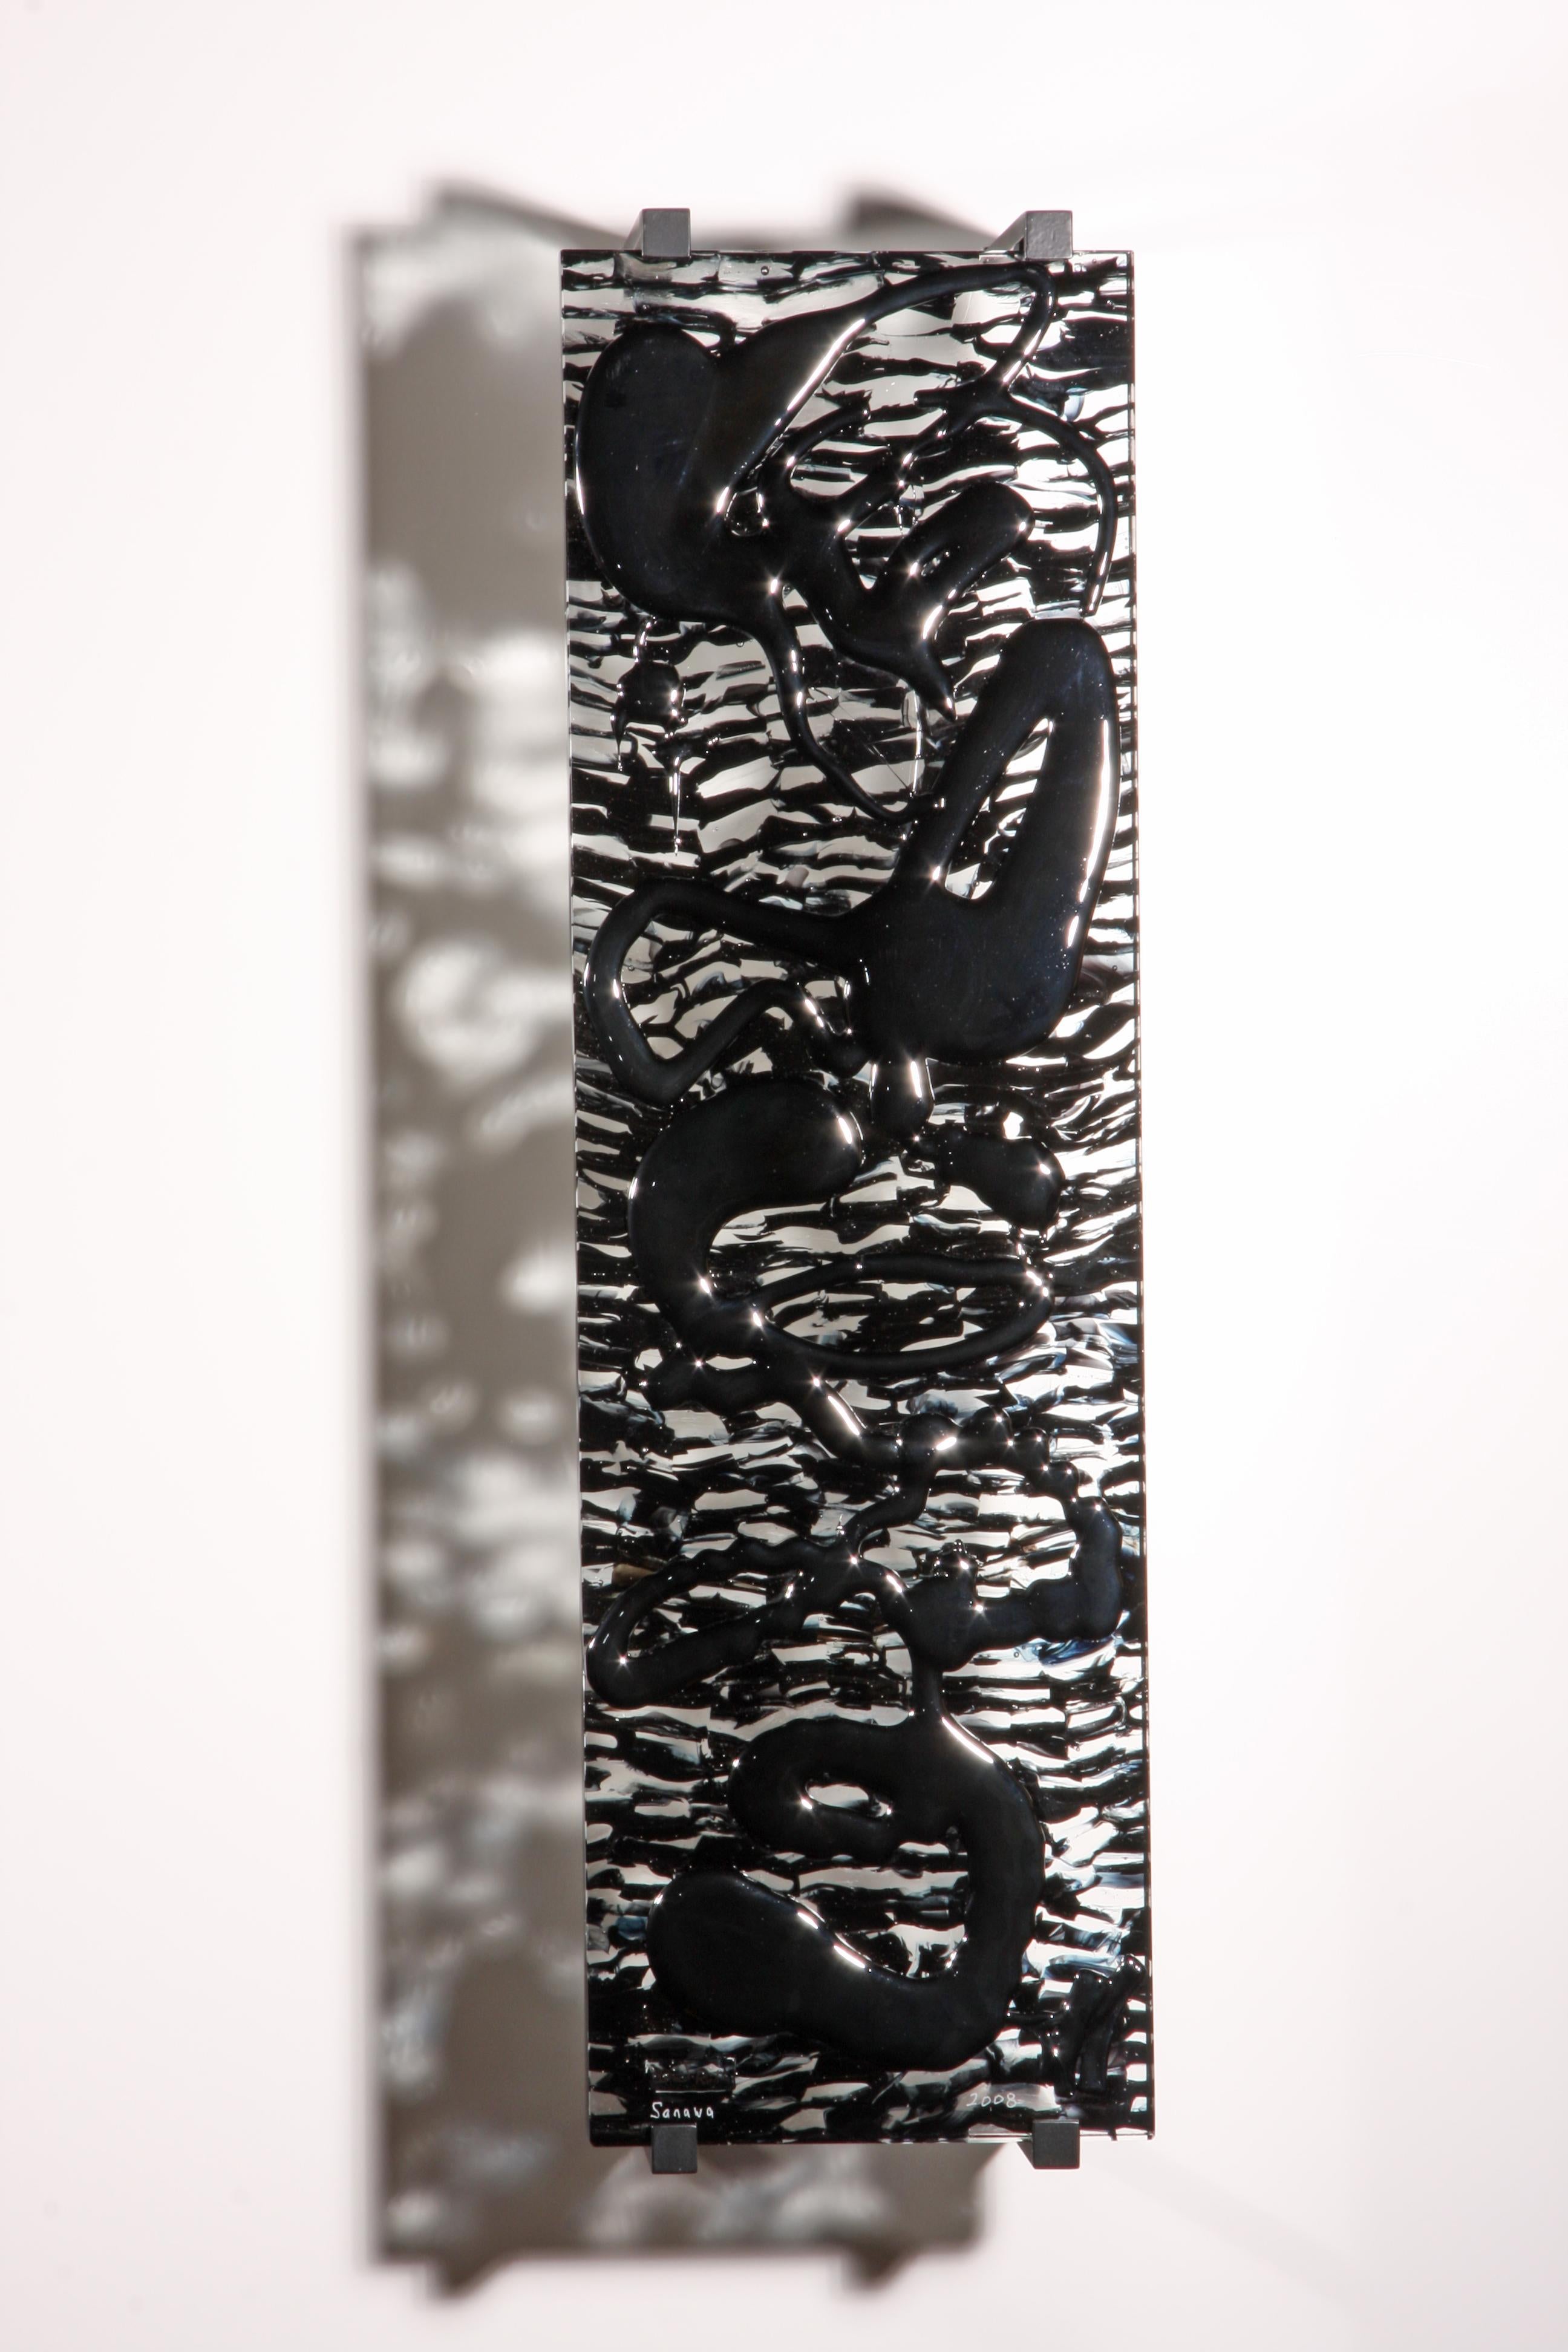 Escultura abstracta de vidrio colado, "Sanawa", 2008 de David Ruth